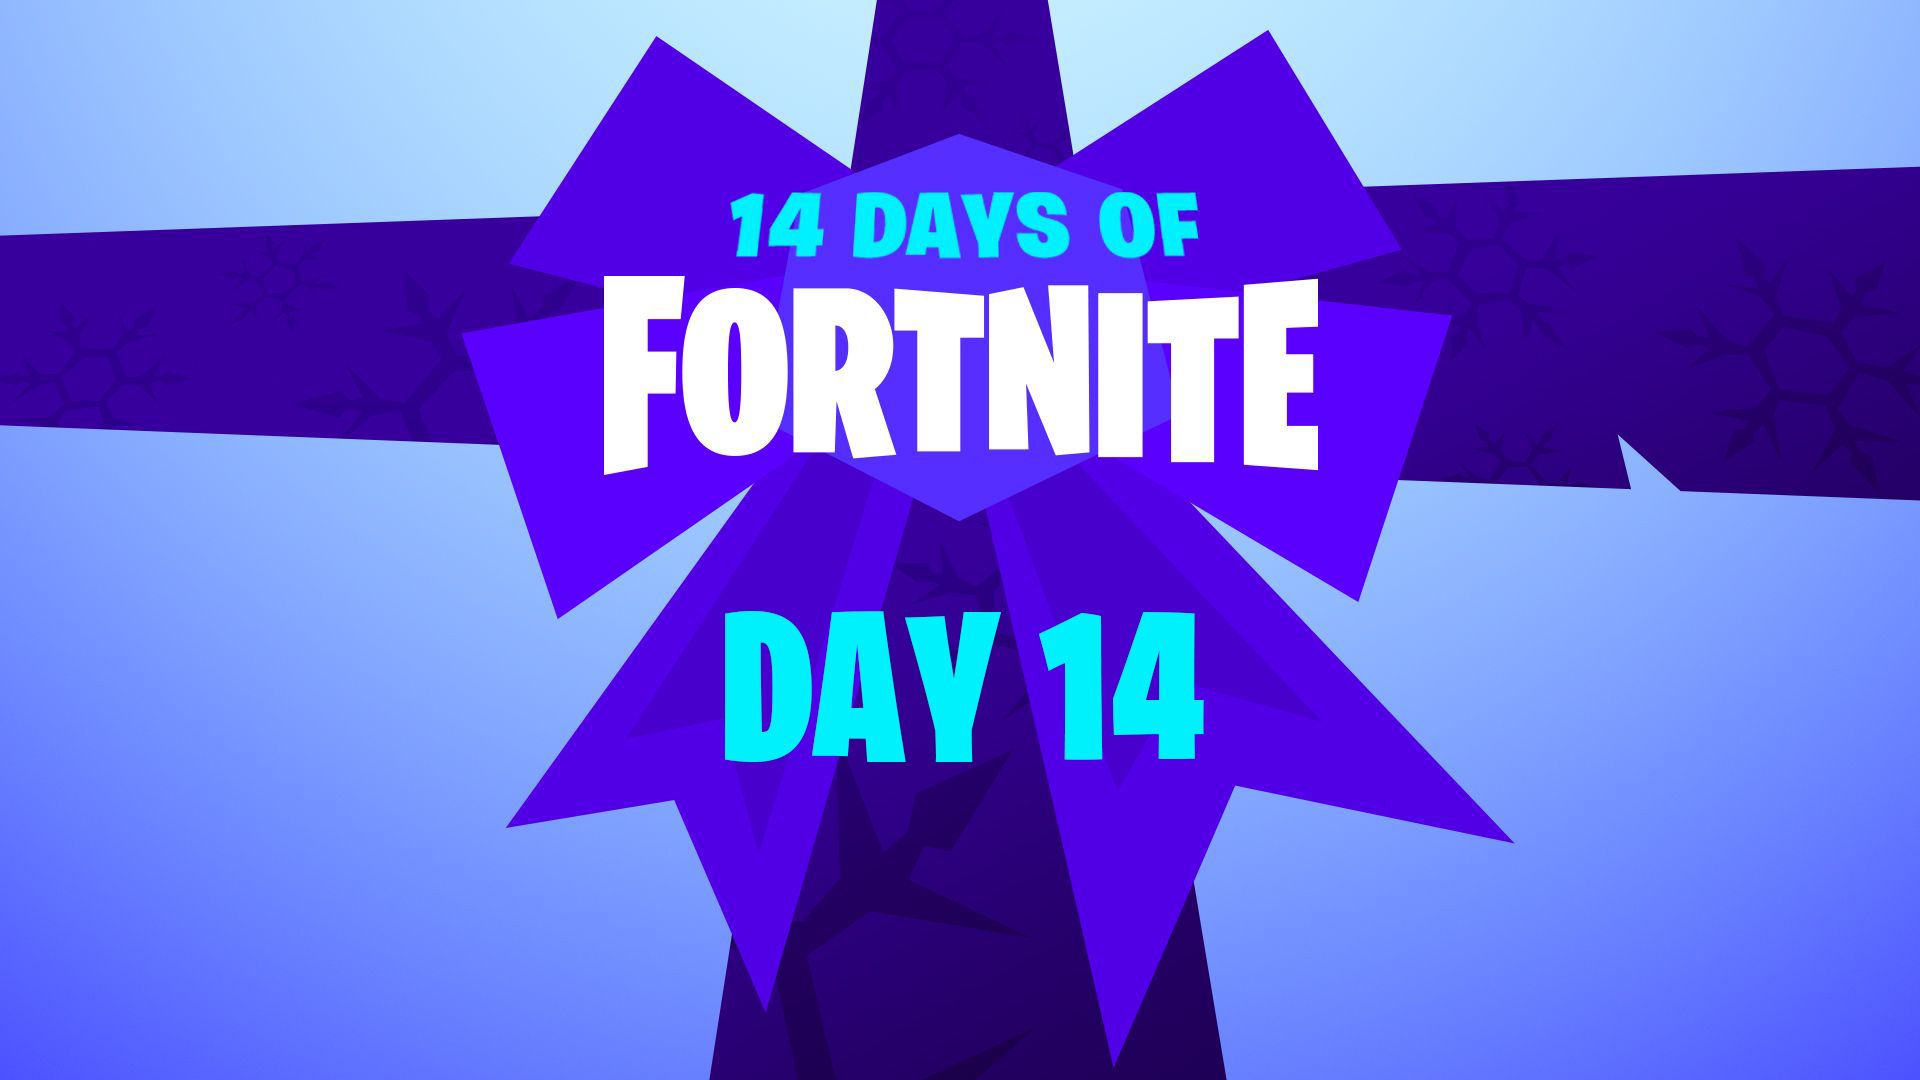 14 Days of Fortnite - Day 14 challenge & reward